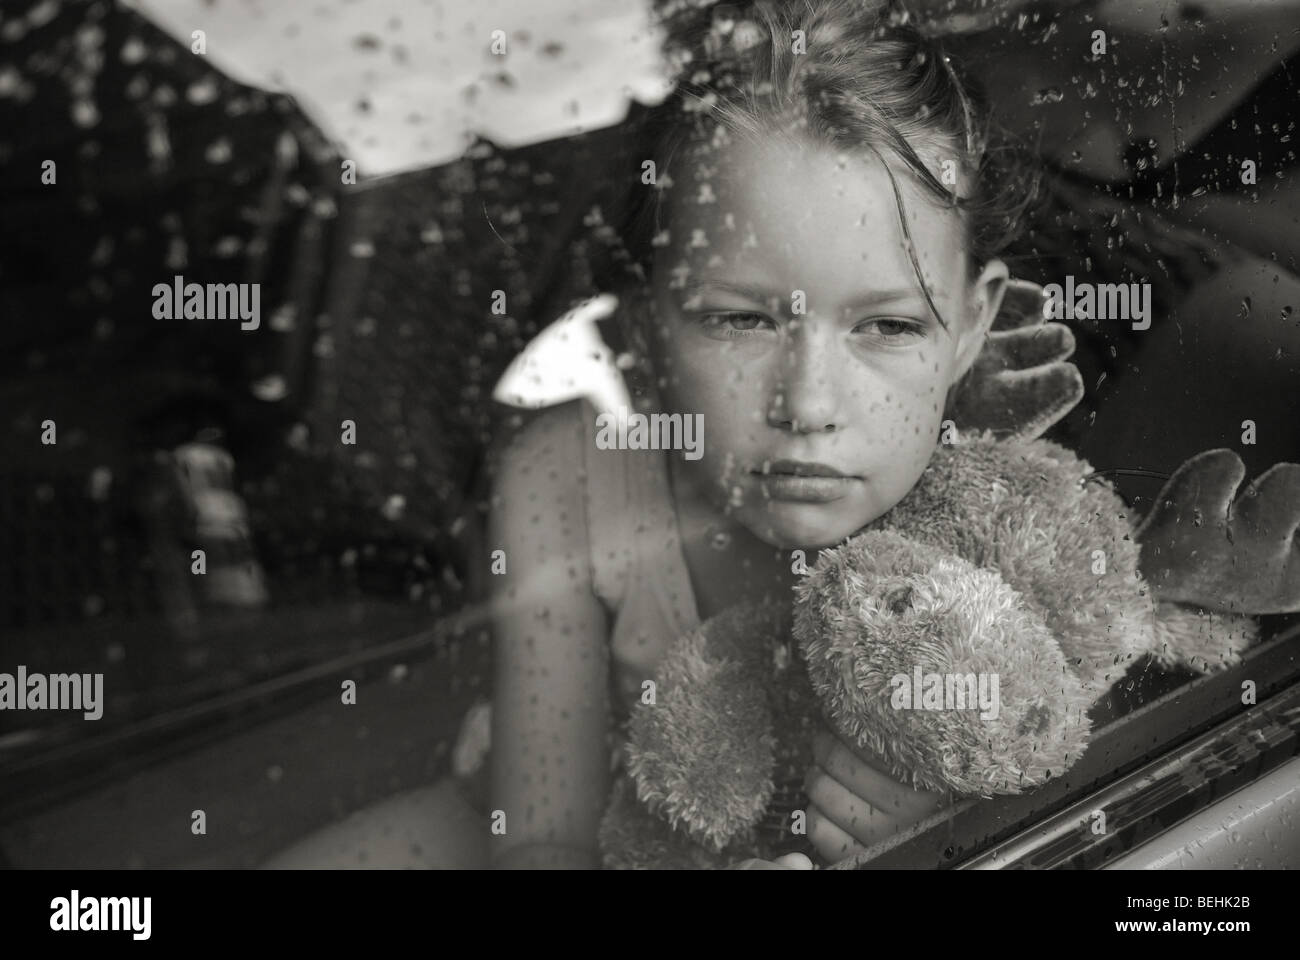 Sad little blonde girl portrait in the rain trough the glass window Stock Photo